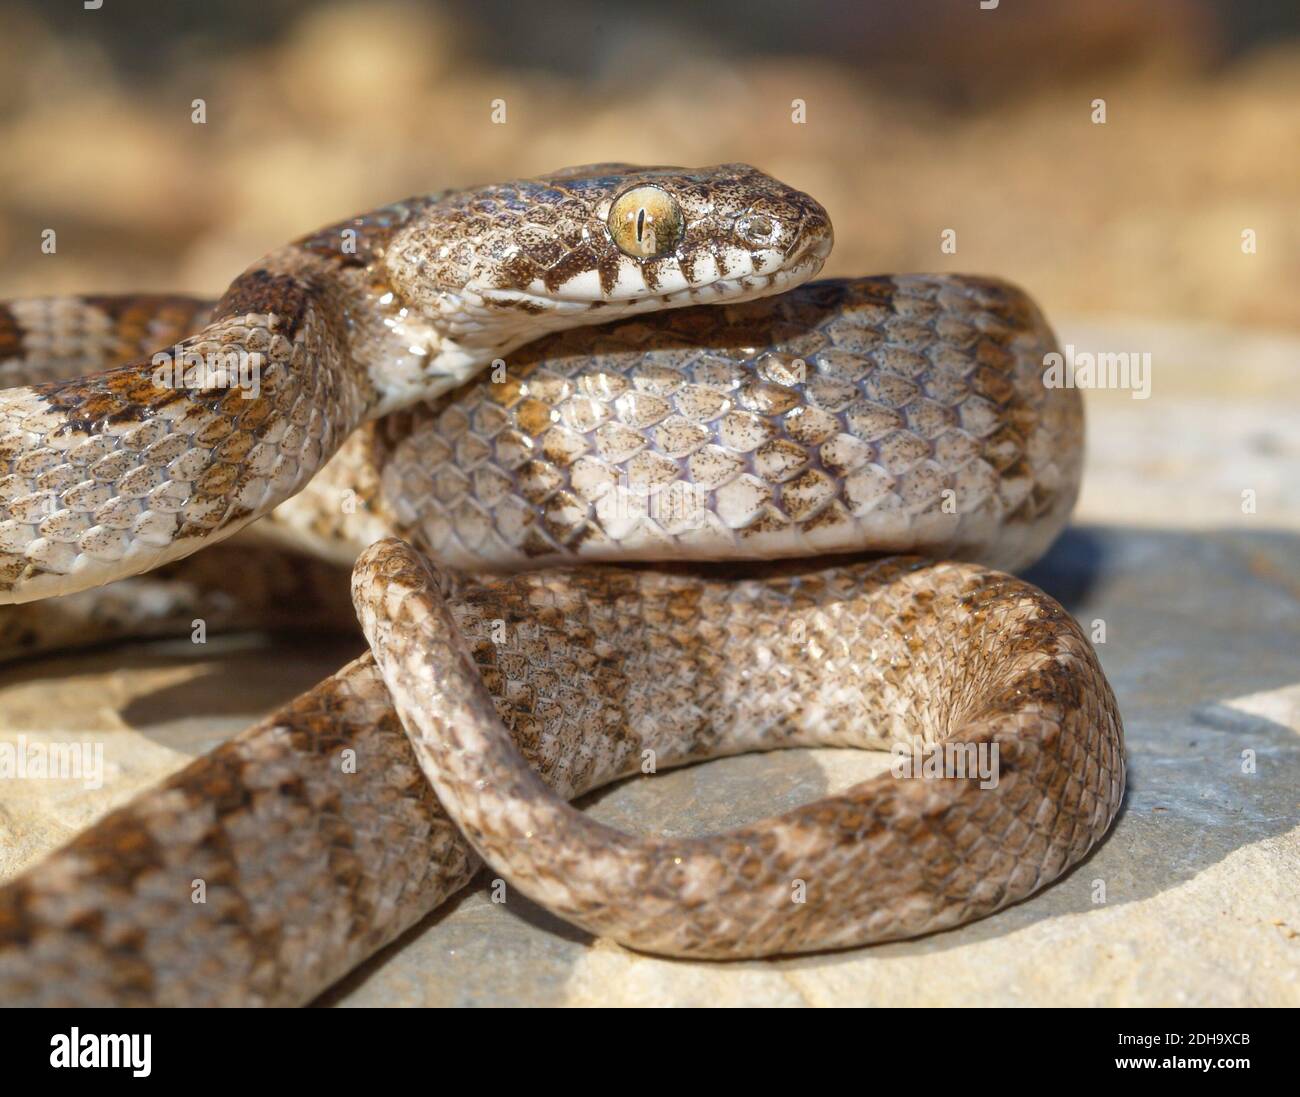 Mediterranean cat snake, Telescopus fallax, soosan snake Stock Photo